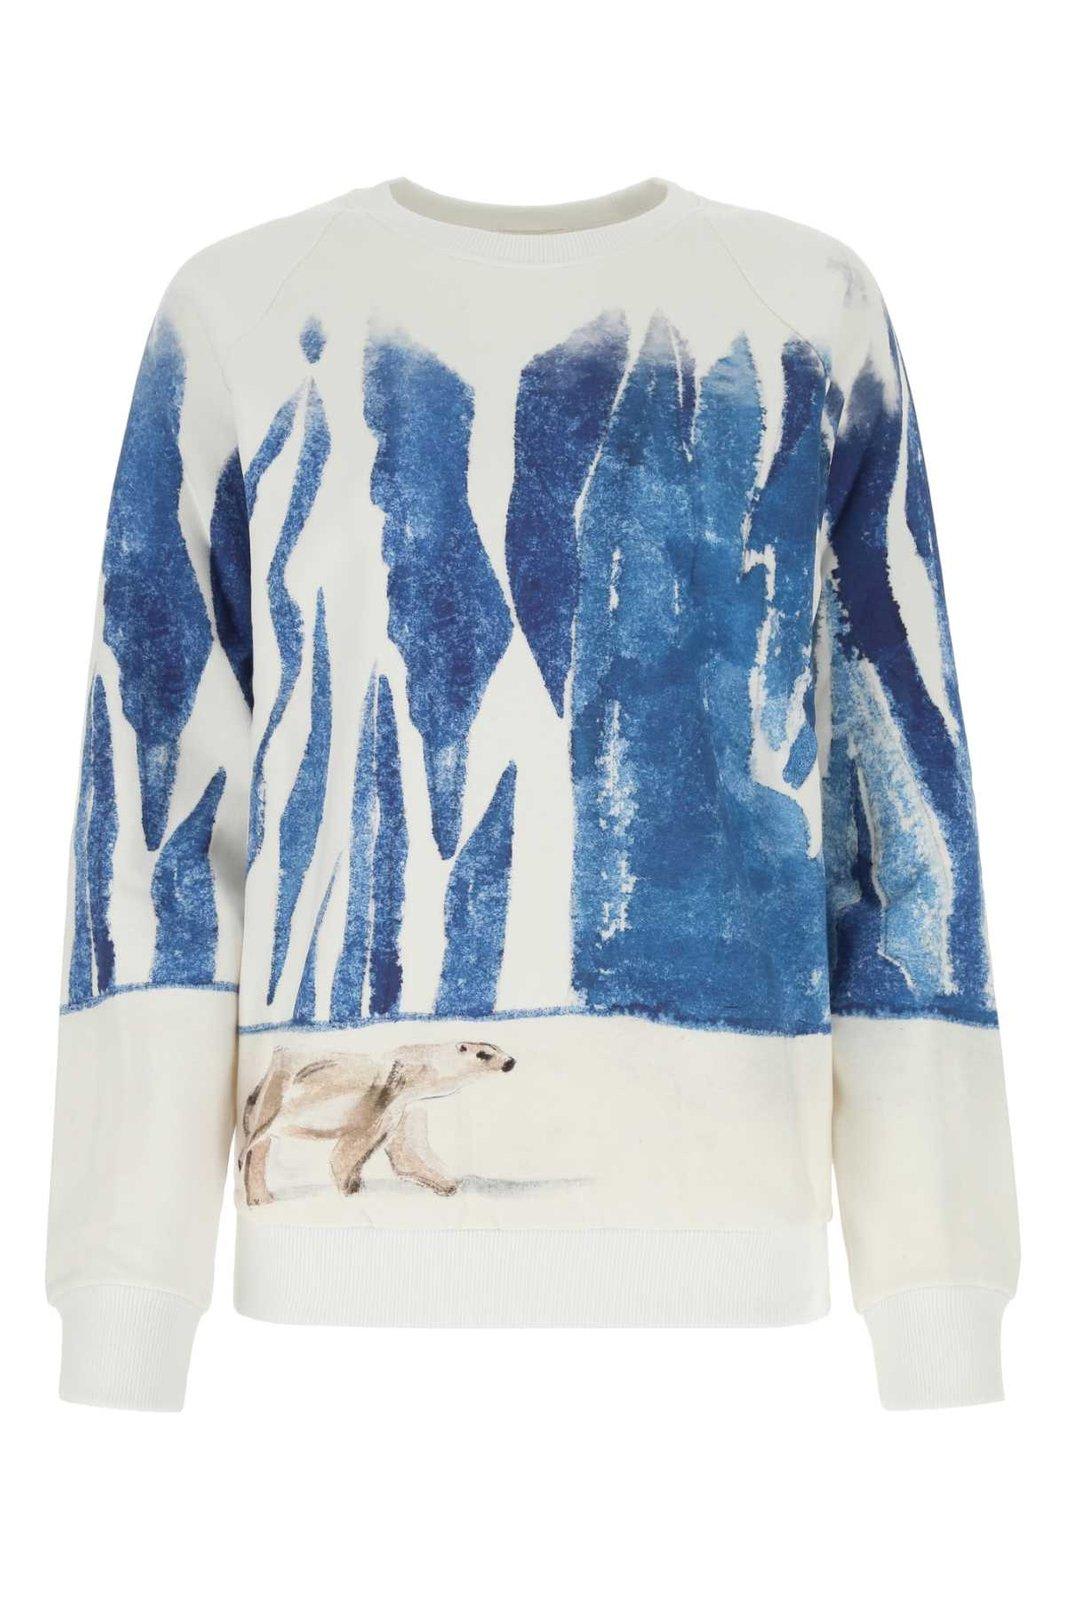 Chloé Polar Bear Printed Sweatshirt